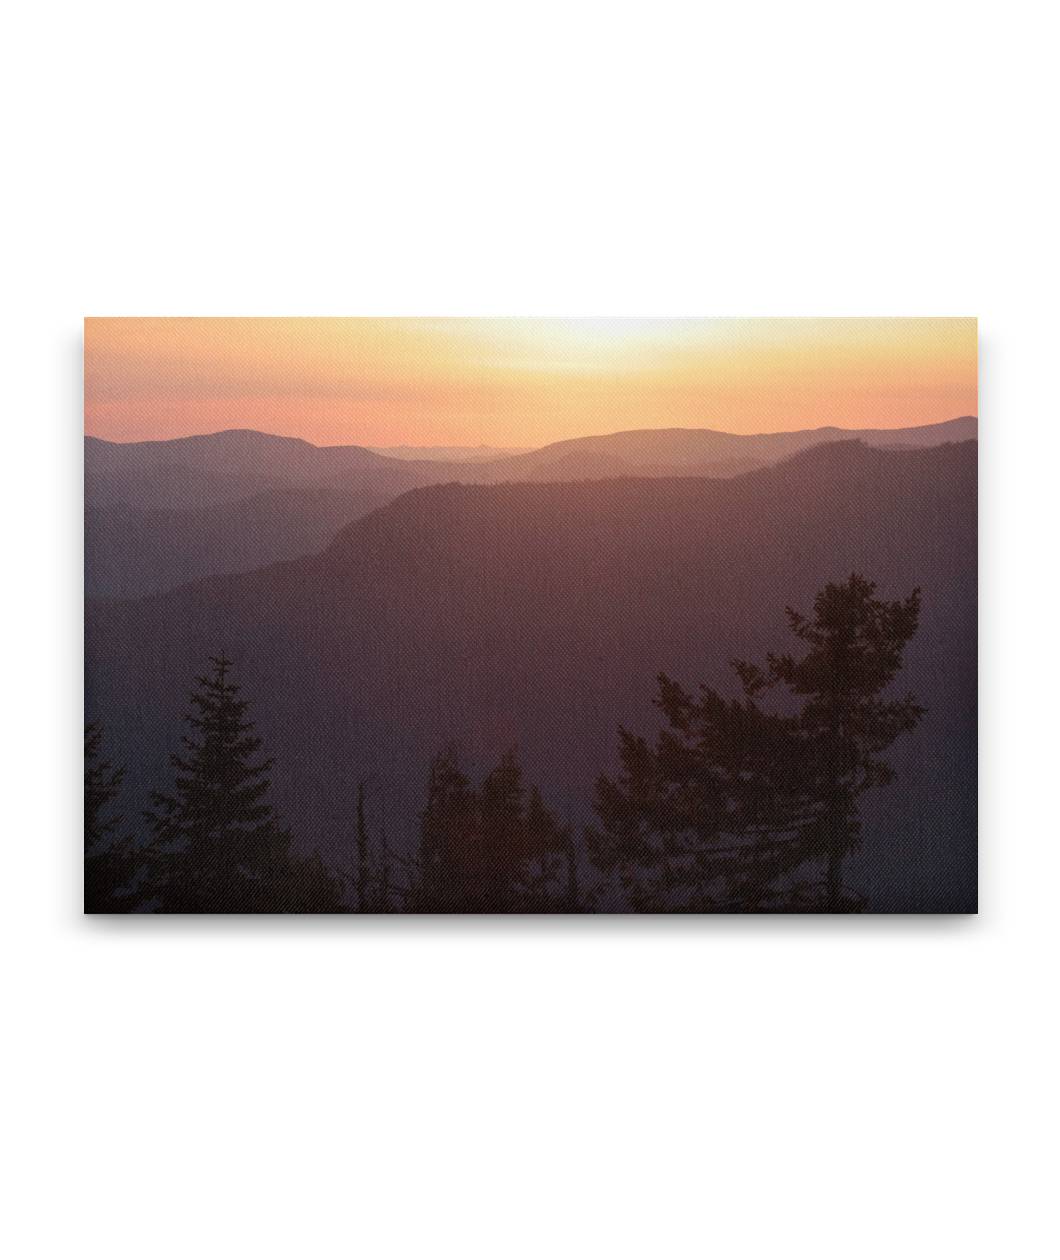 West Cascades Sunset From Illahee Rock Summit, Umpqua National Forest, Oregon, USA